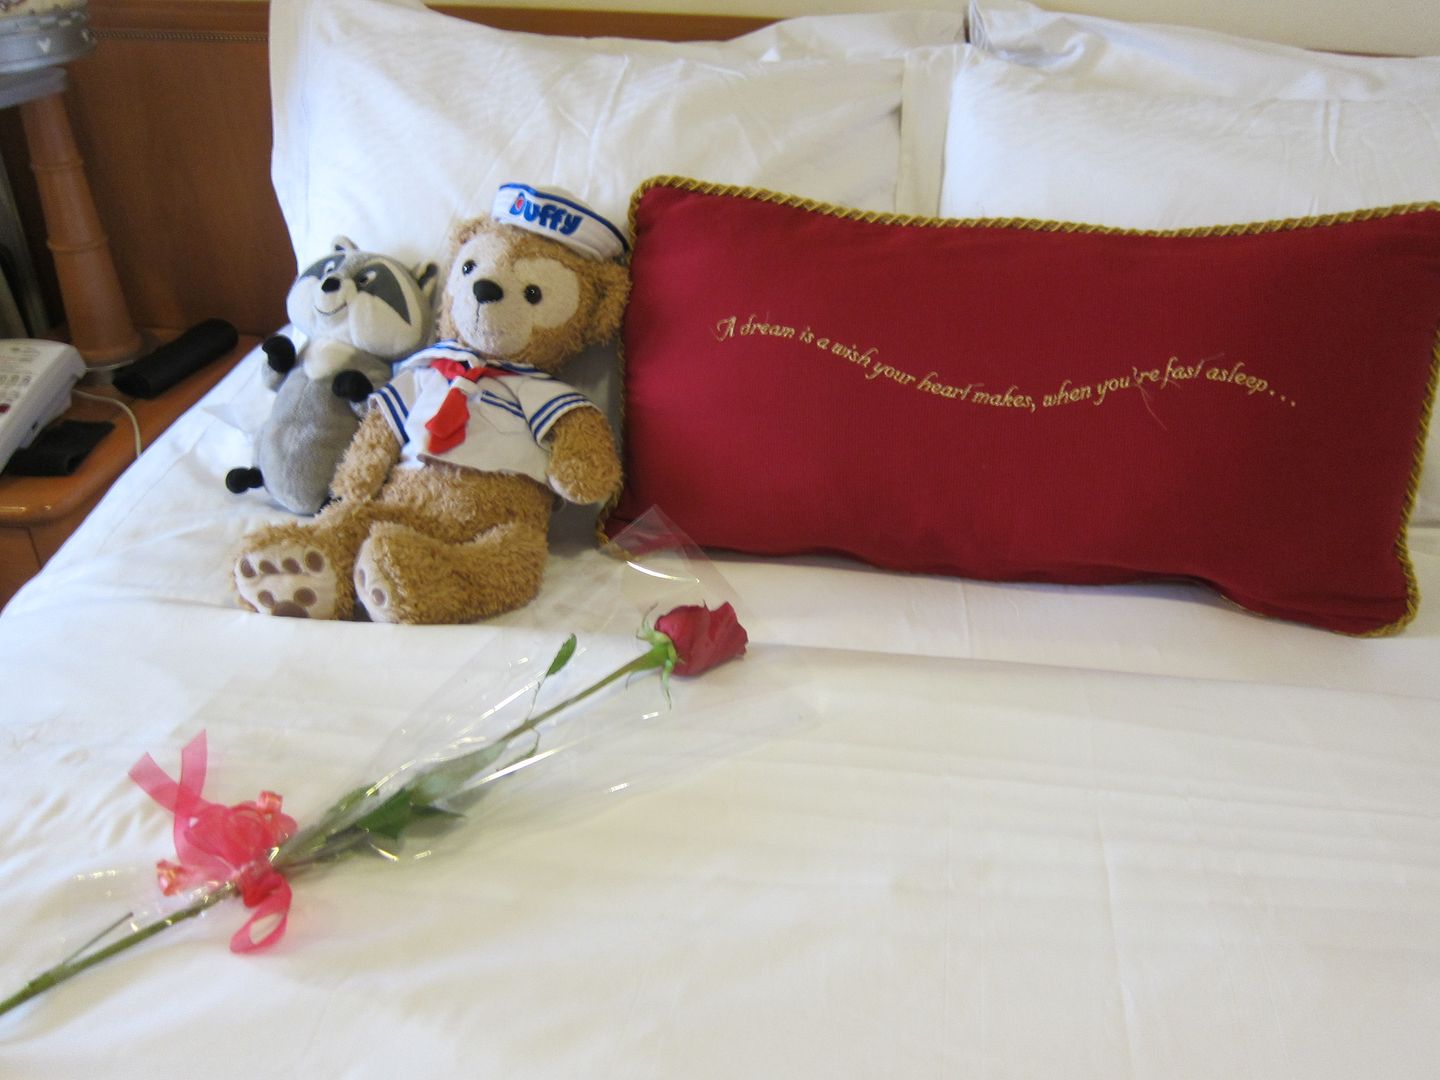 Disney Wonder Bed with Pillow | Disney Cruise Line